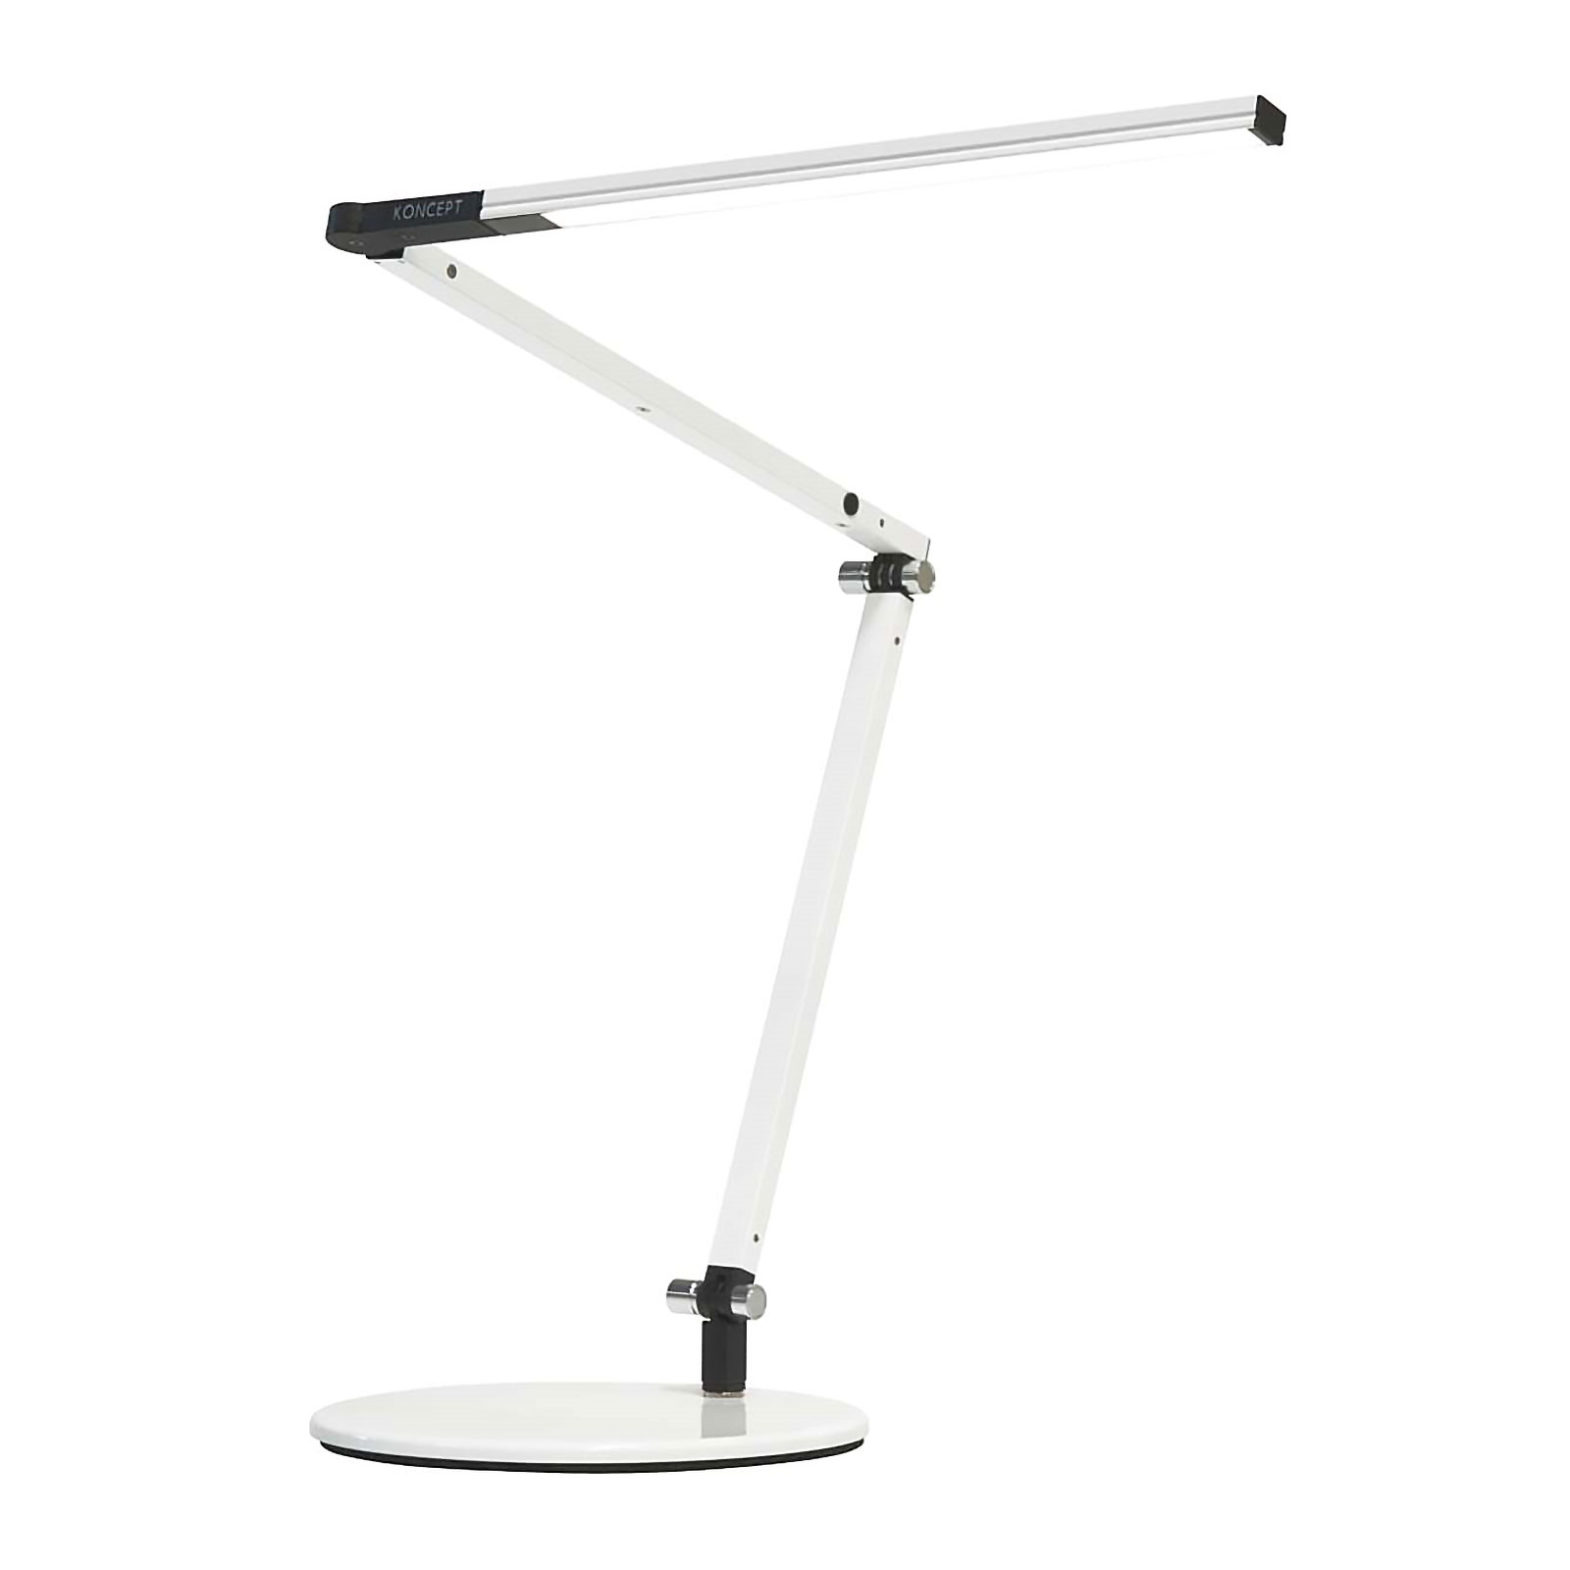 Koncept Z-Bar Black Desk Lamp: Illuminating Elegance and Efficiency